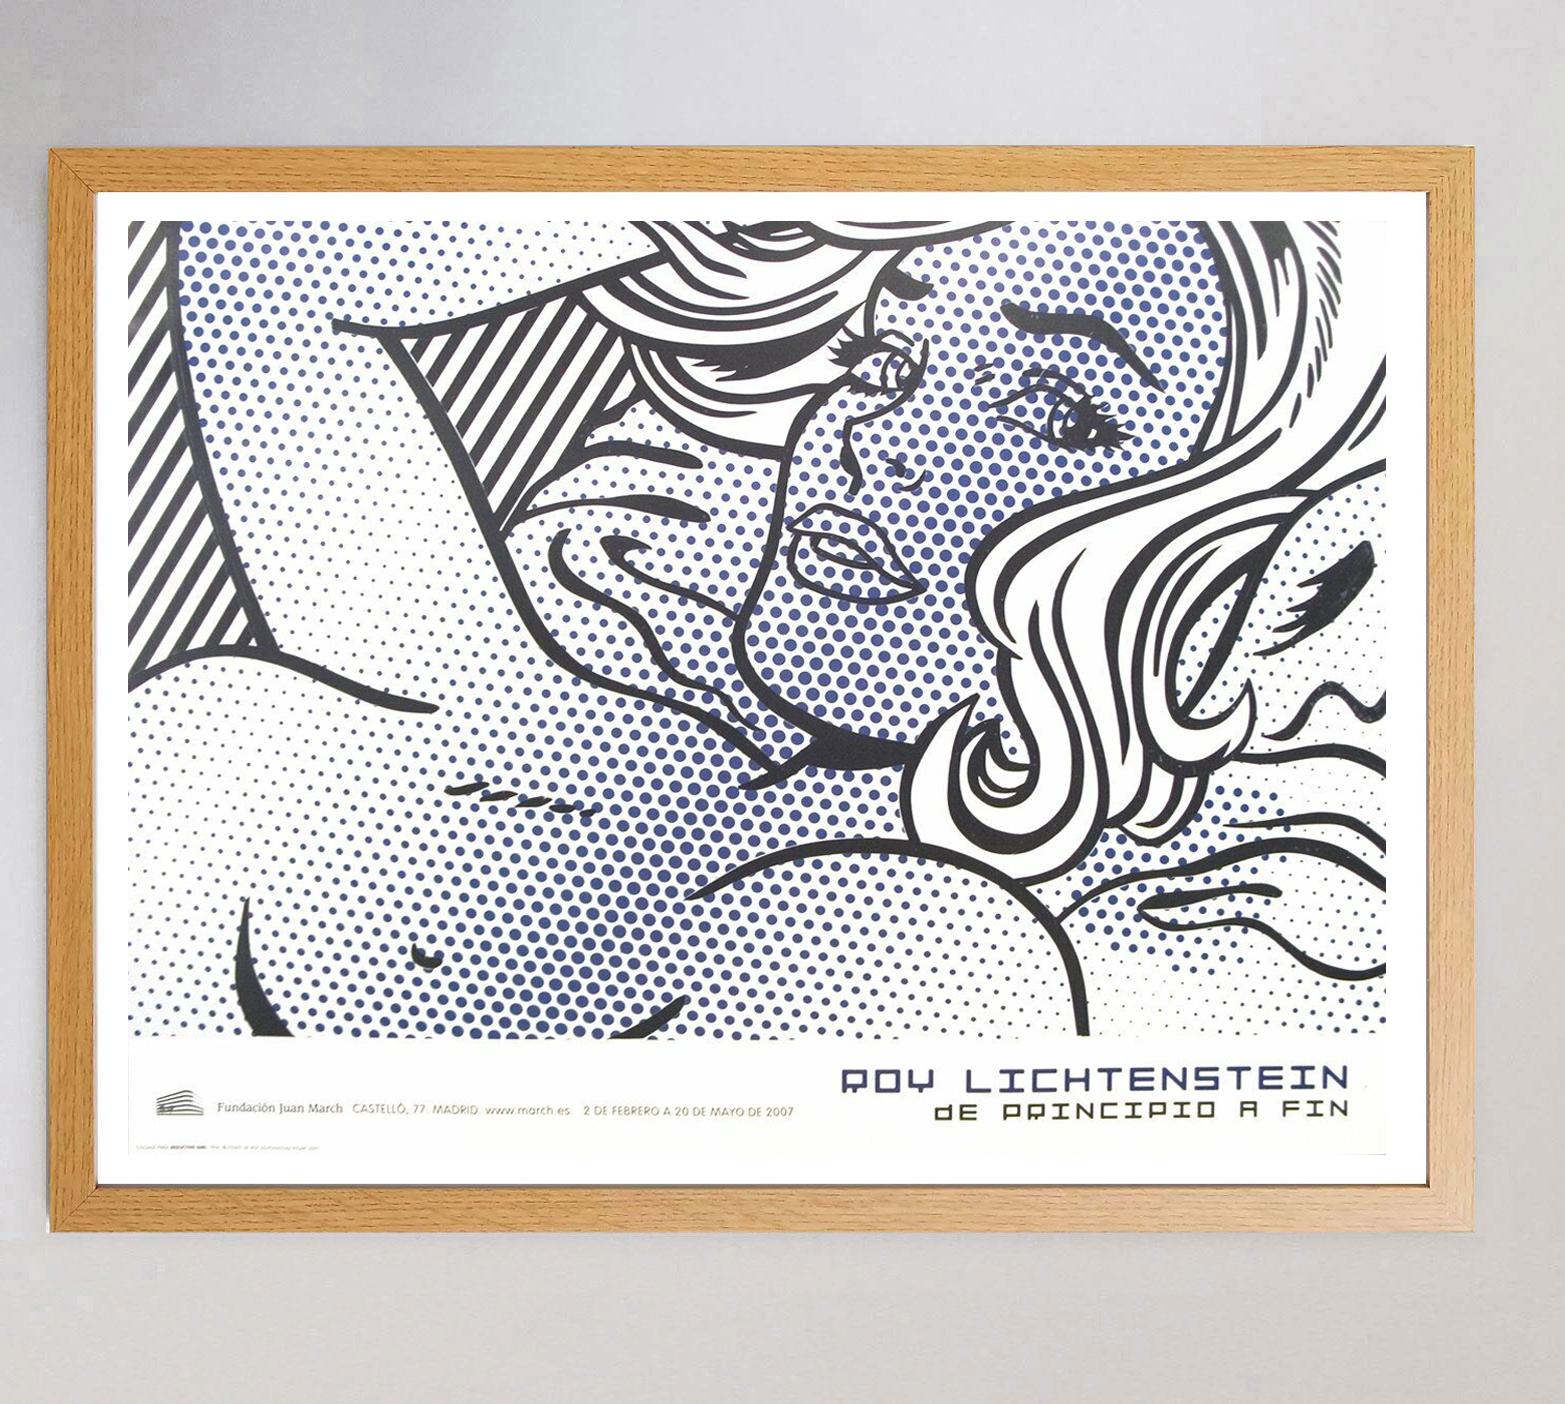 Spanish 2007 Roy Lichtenstein - Seductive Girl - Fundacion Juan March Original Poster For Sale